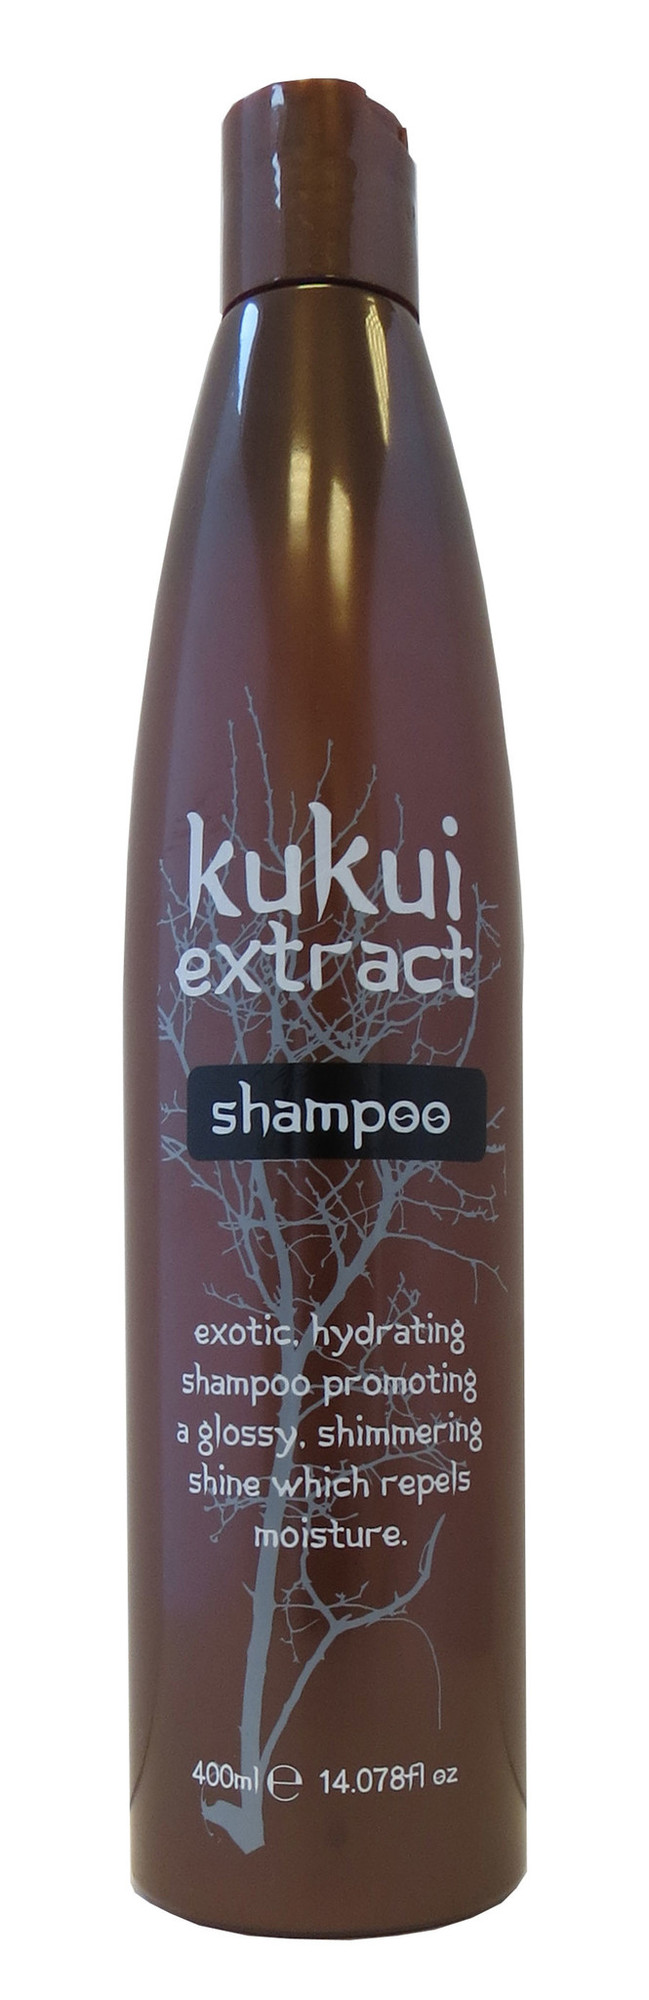 Xhc Shampoo 400 ml Kukui